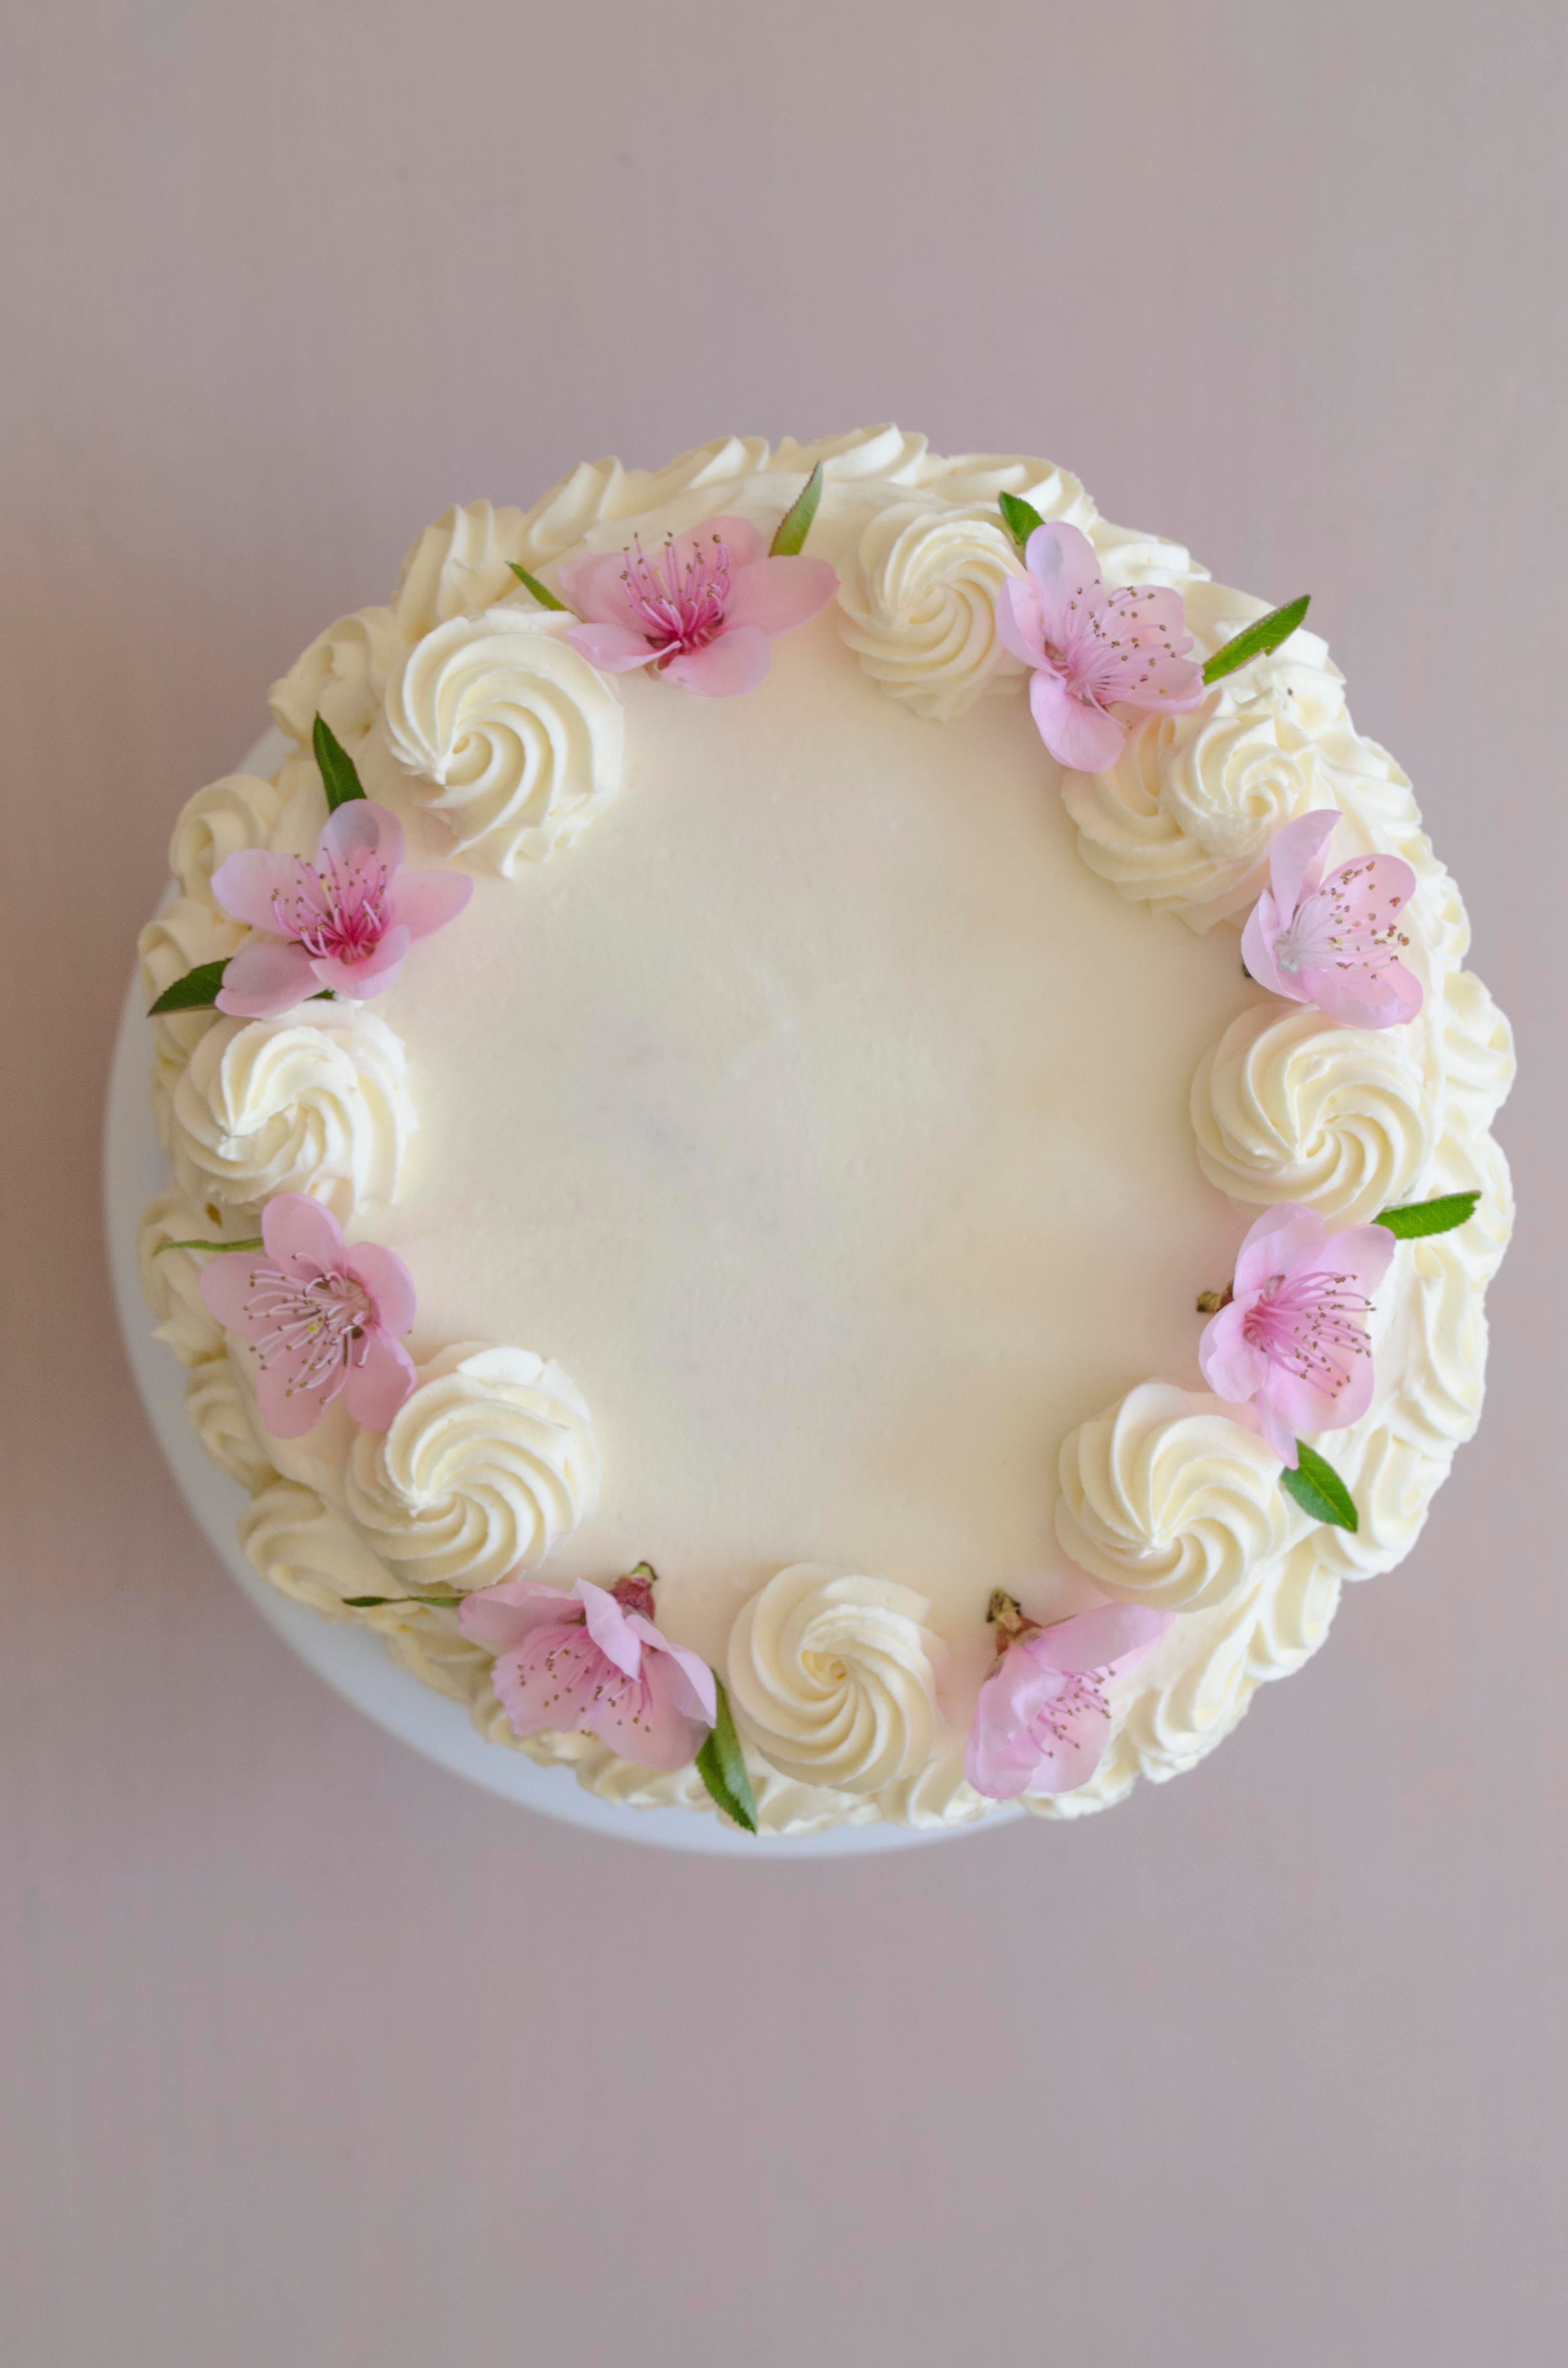 Fancy Cream Cake stock image. Image of dessert, meringue - 616201